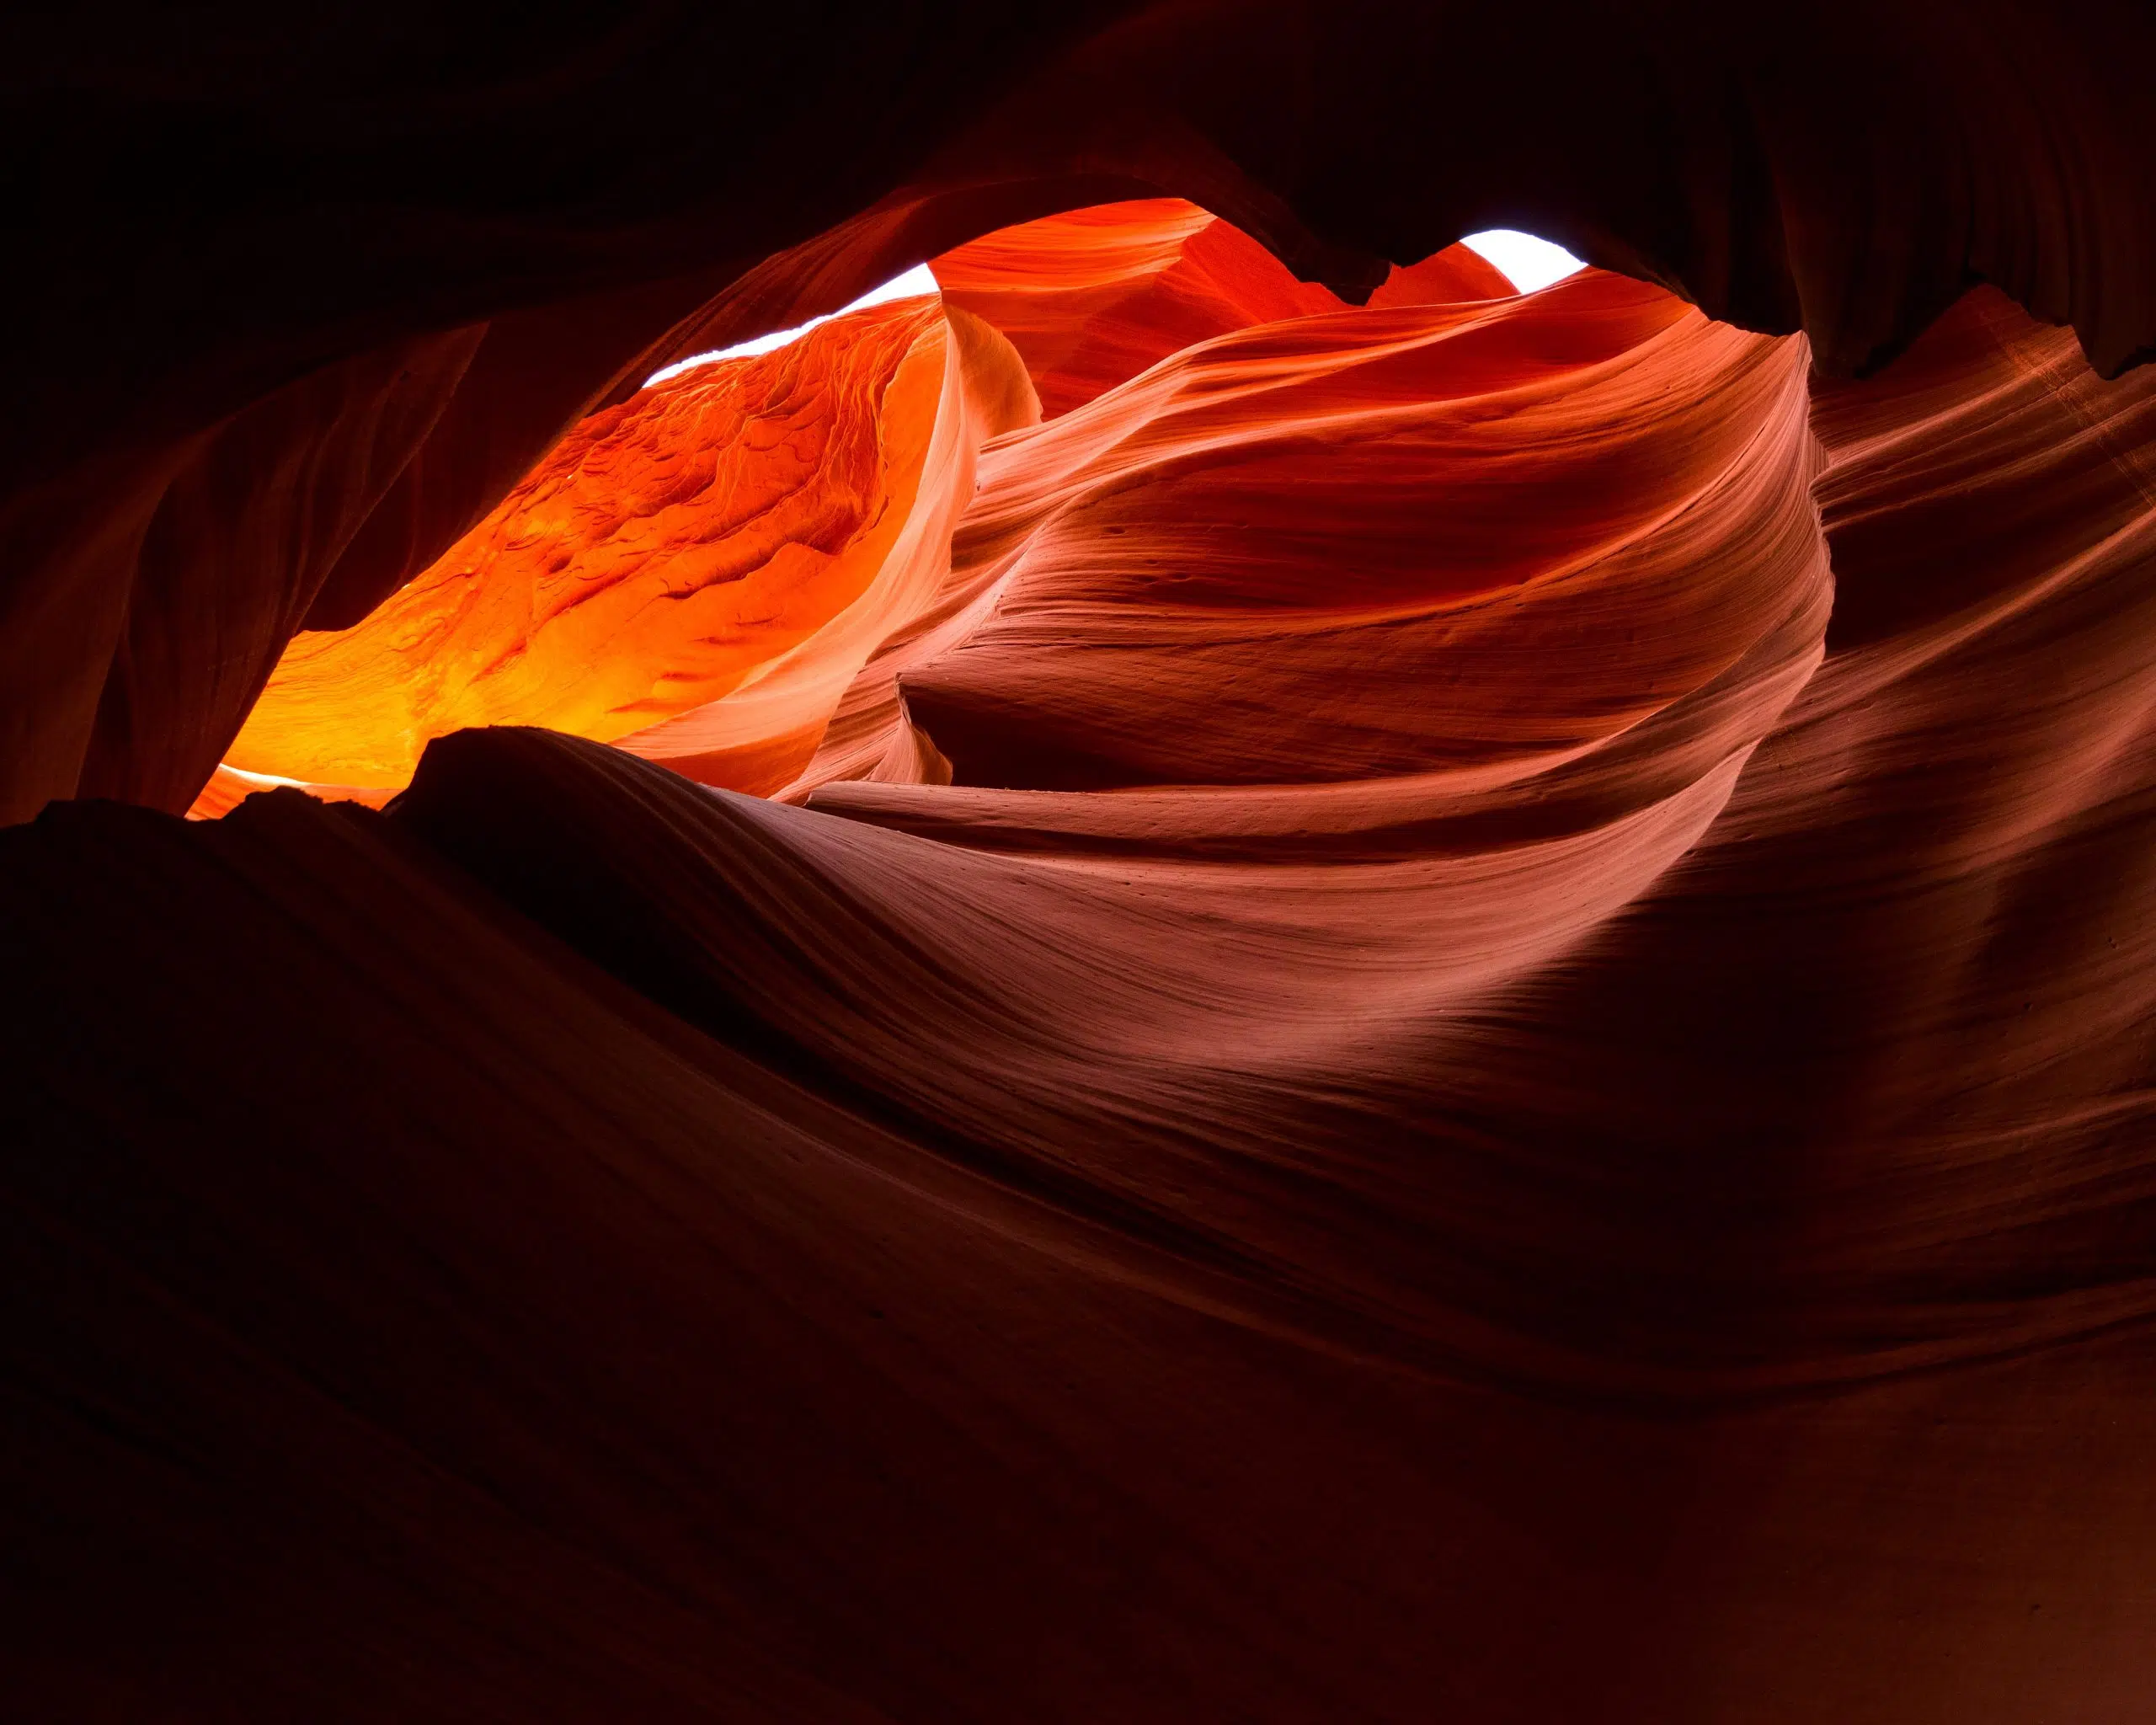 The brilliant orange glowing walls of antelope canyon.